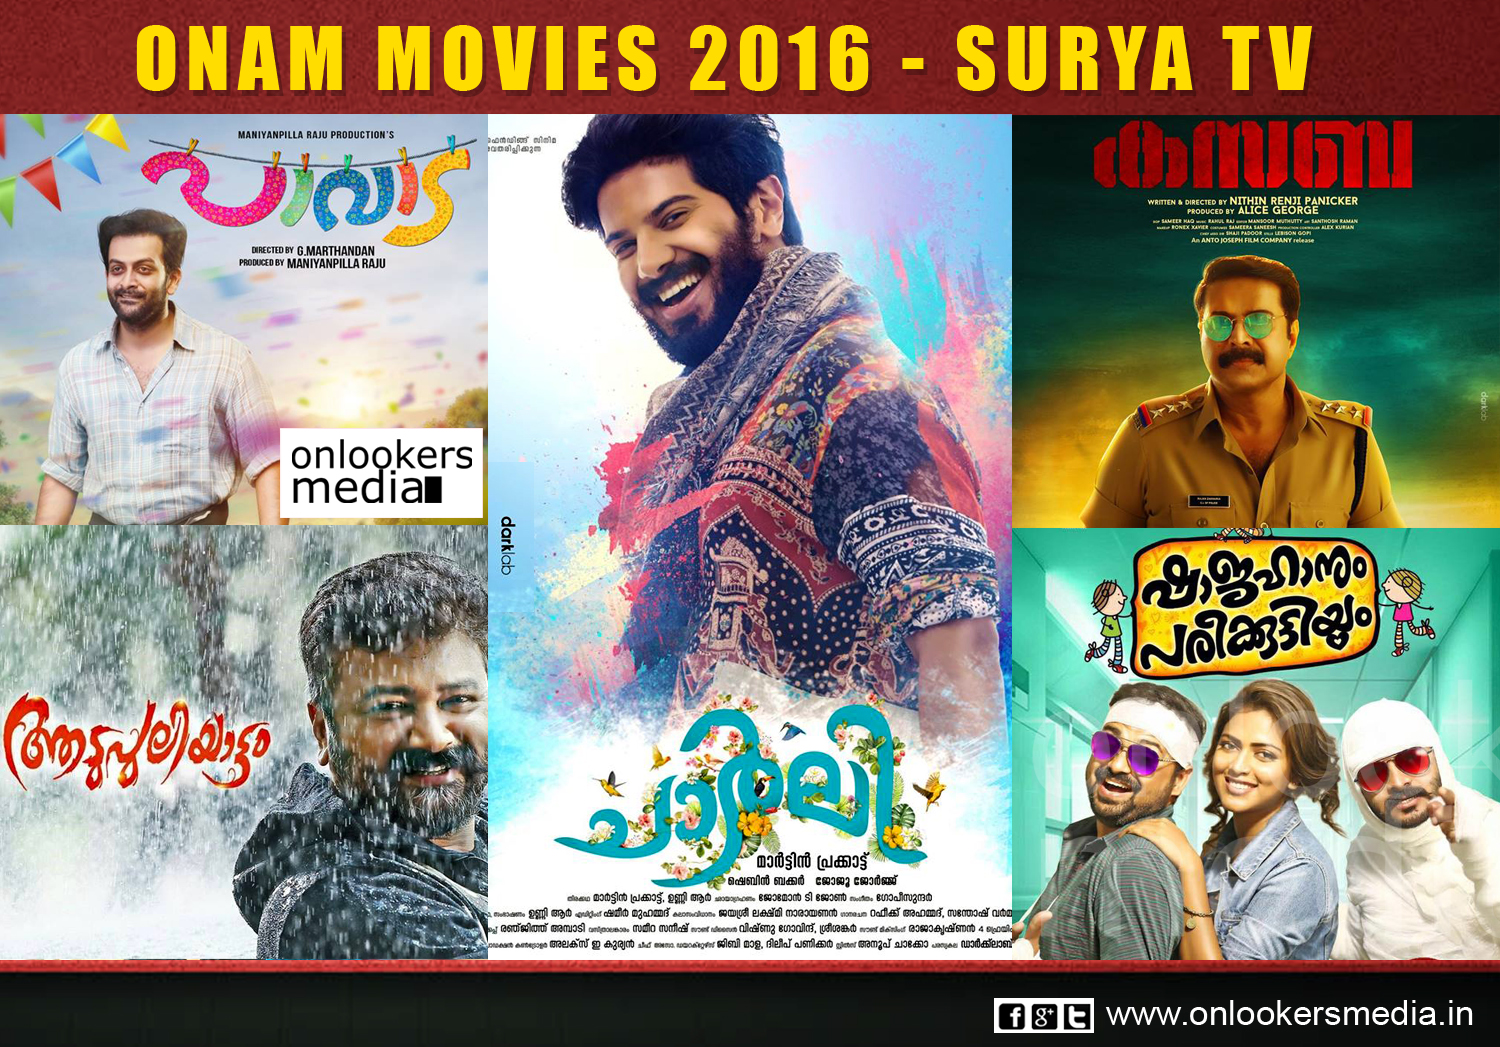 Onam 2016, Asianet, Surya TV, kasaba in tv, Surya TV onam movies 2016, asianet onam movies 2016